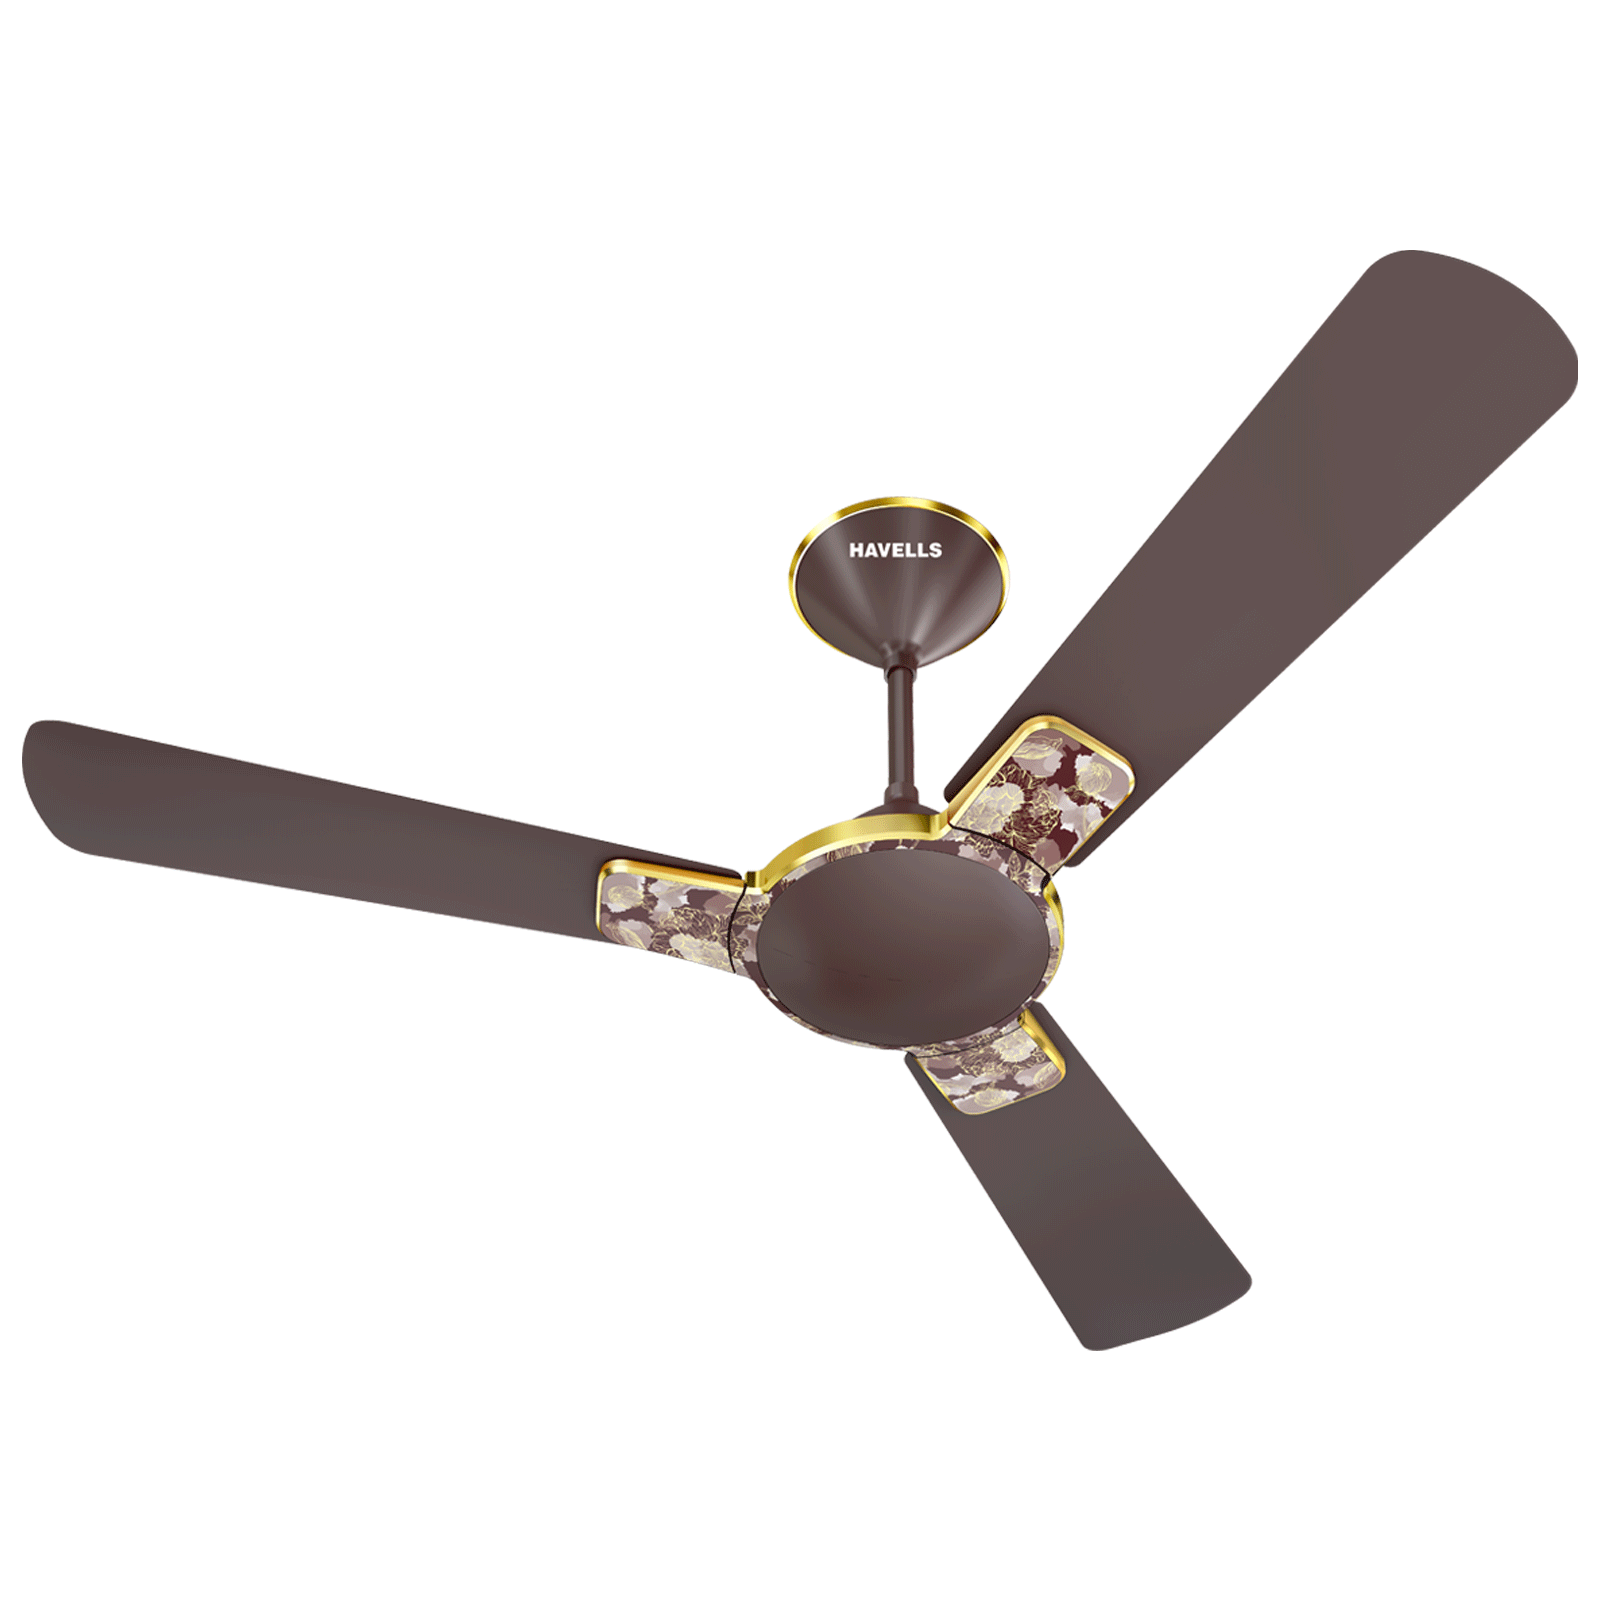 Havells Enticer Art - NS Flora 120cm Sweep 3 Blade Ceiling Fan (390 RPM Spin Speed, FHCEASTFEB48, Espresso Brown)_1